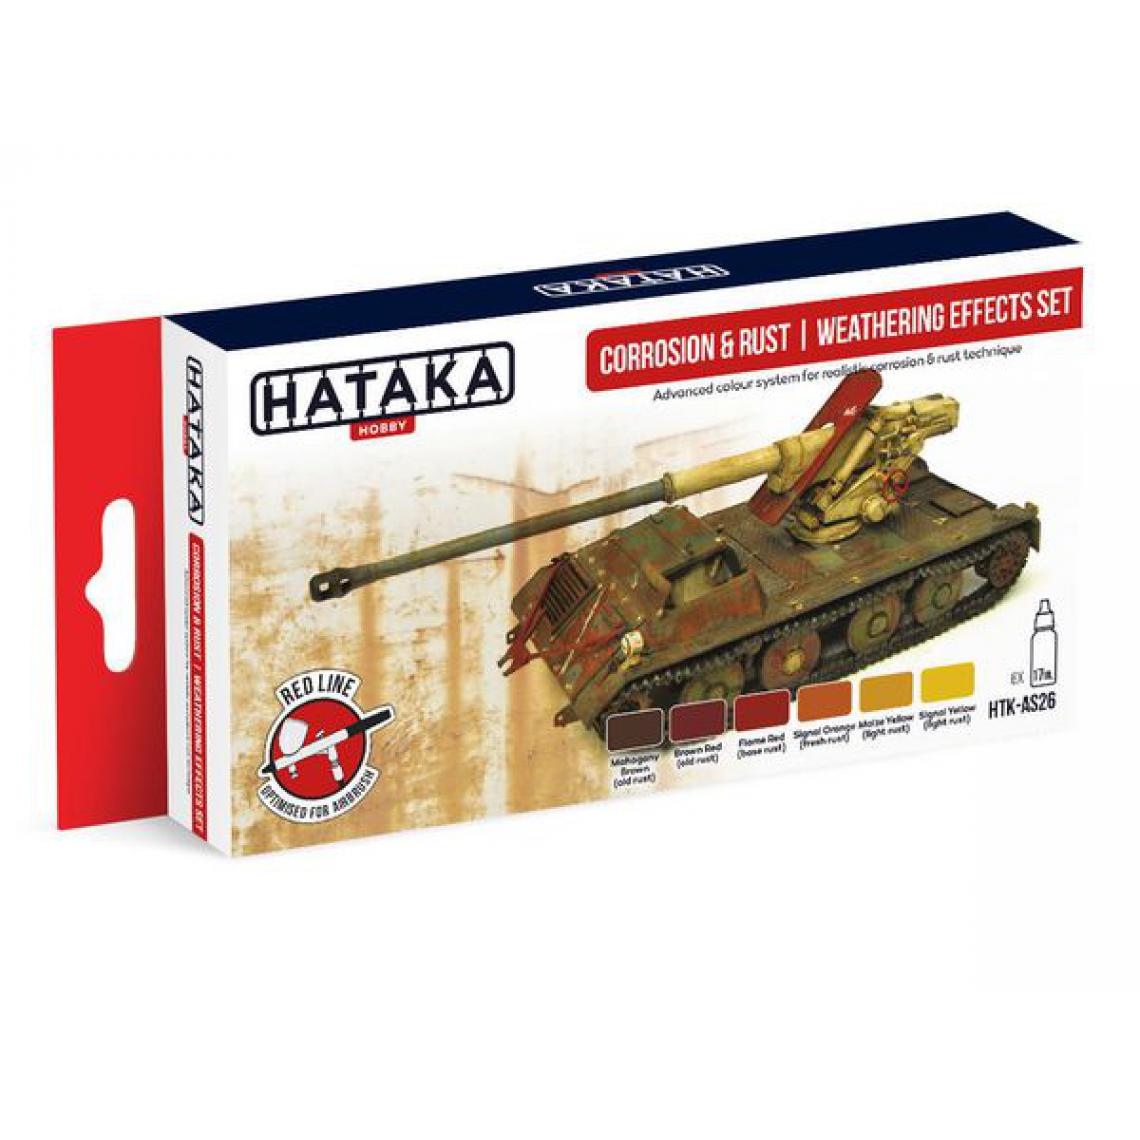 Hataka - Red Line Set (6 pcs) Corrosion & rust weathering effects set - HATAKA - Accessoires et pièces